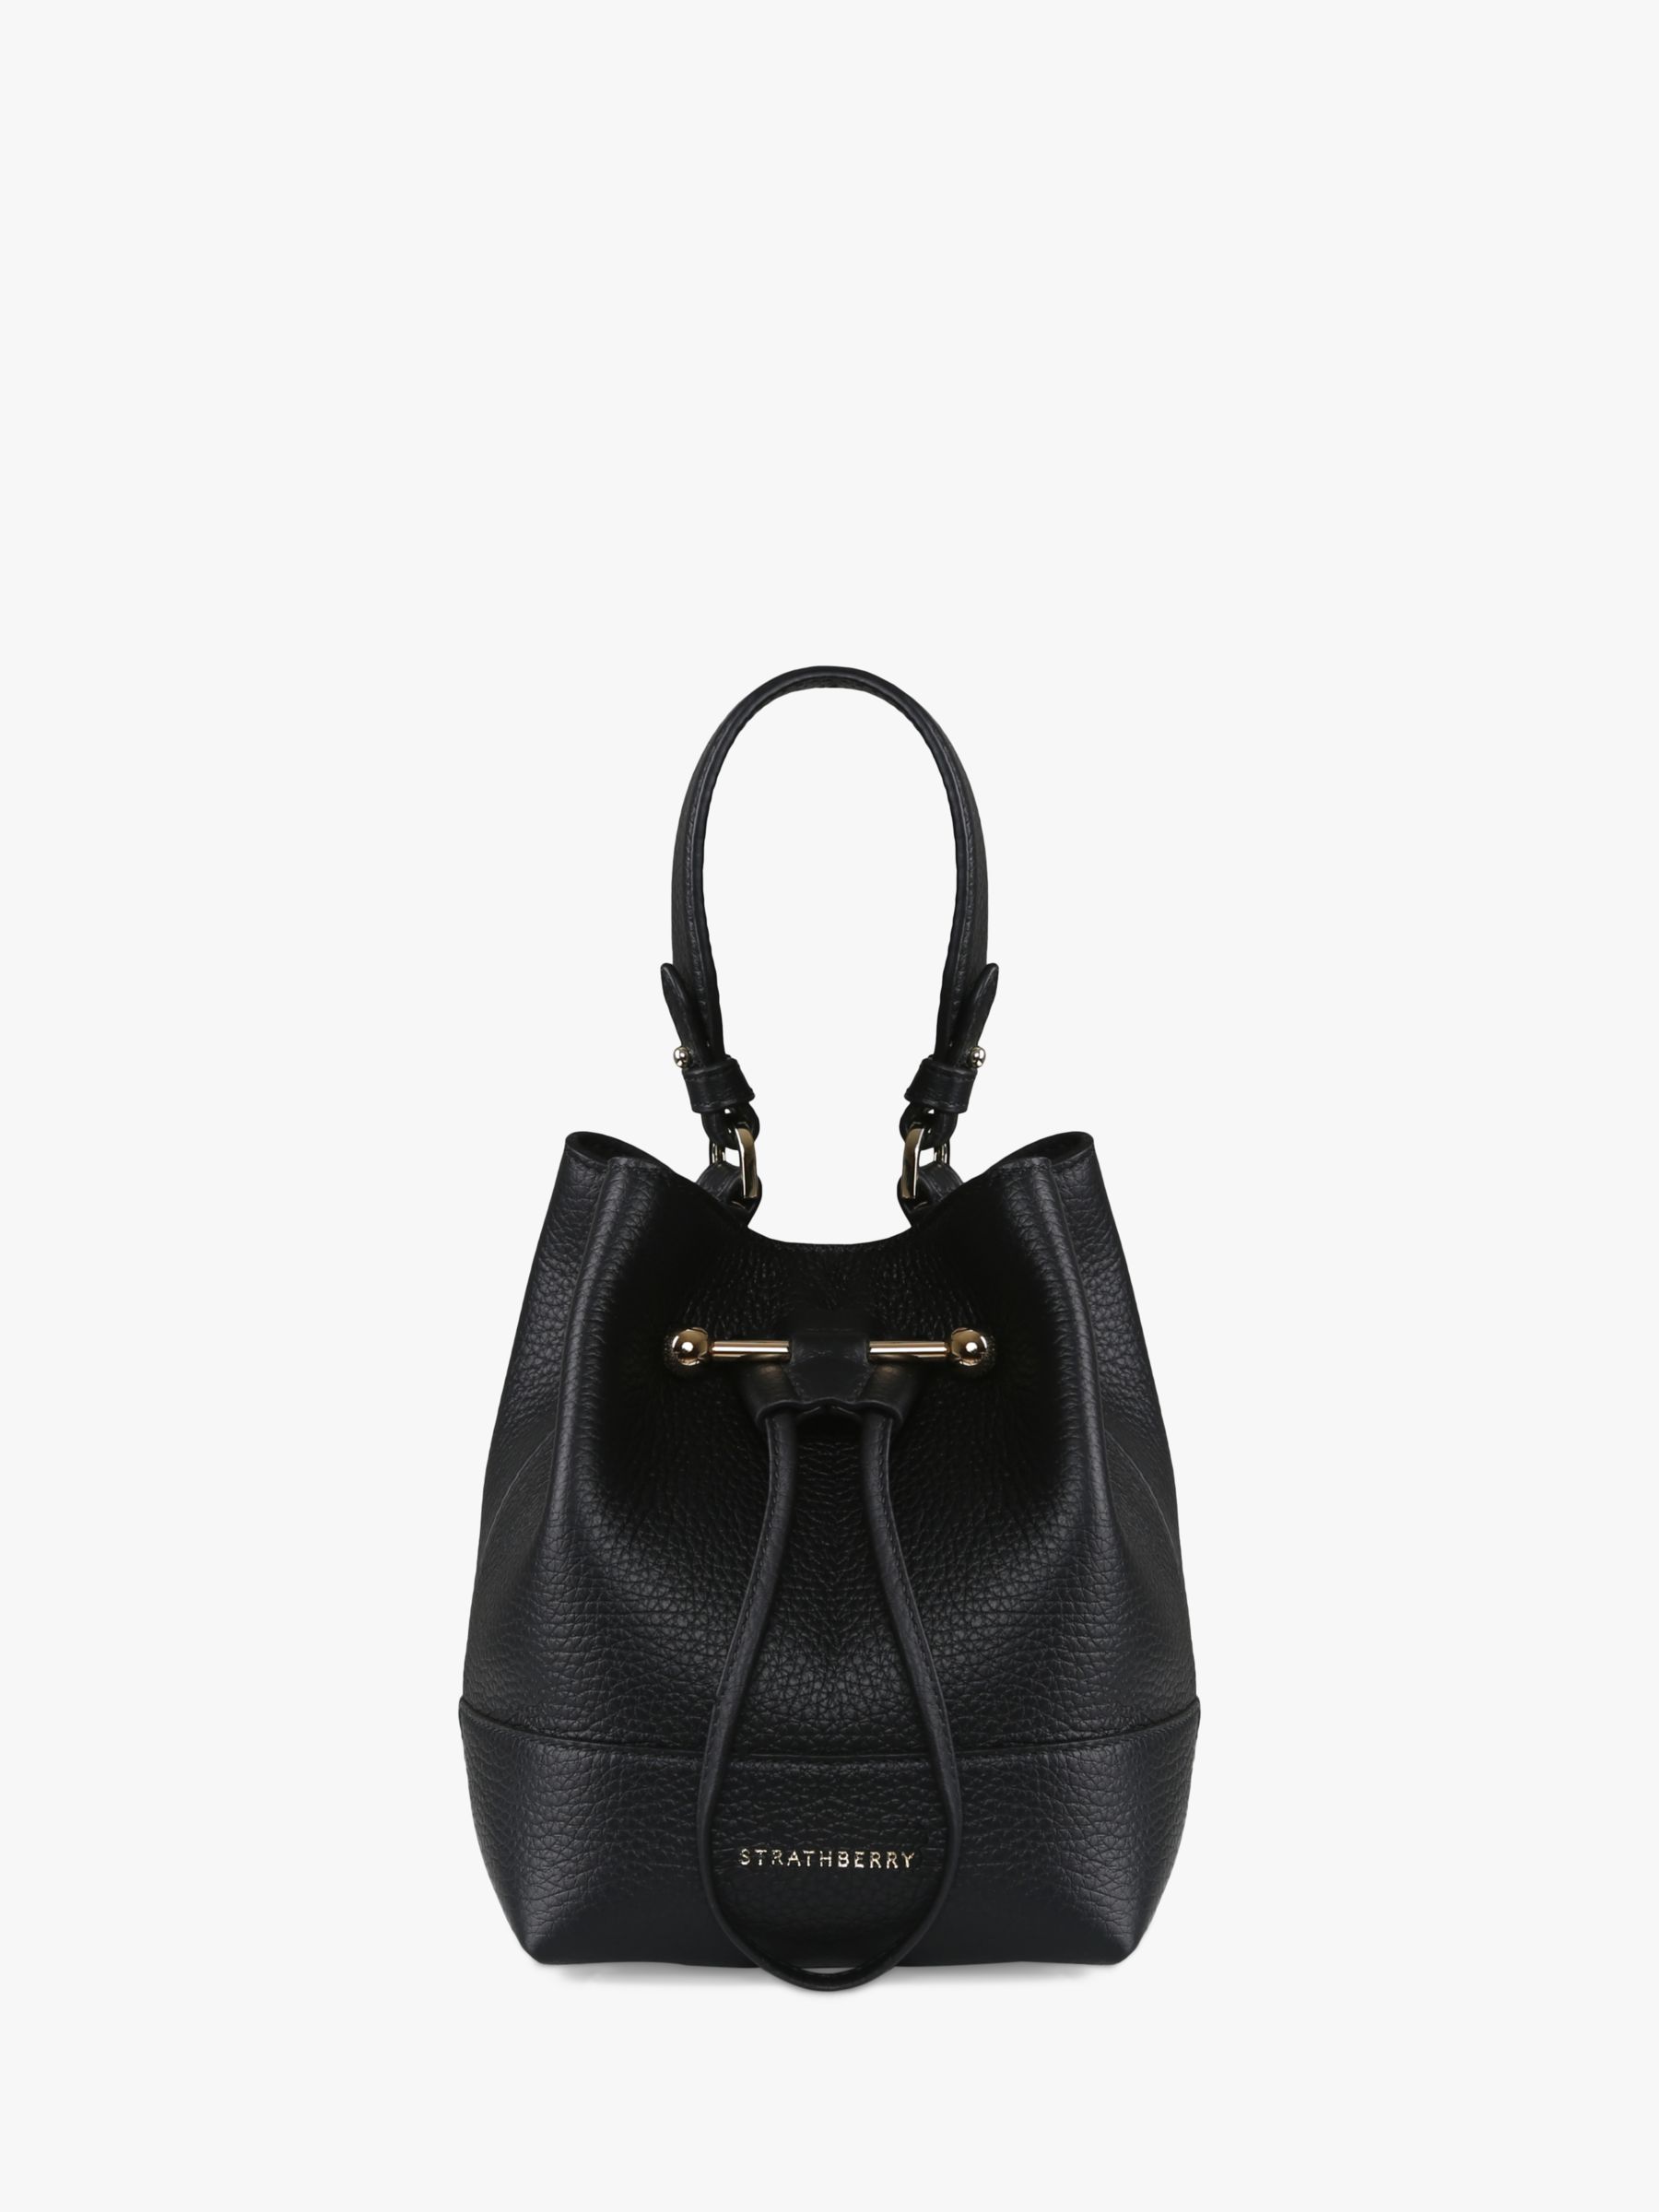 Strathberry Lana Osette Handbag, Black at John Lewis & Partners